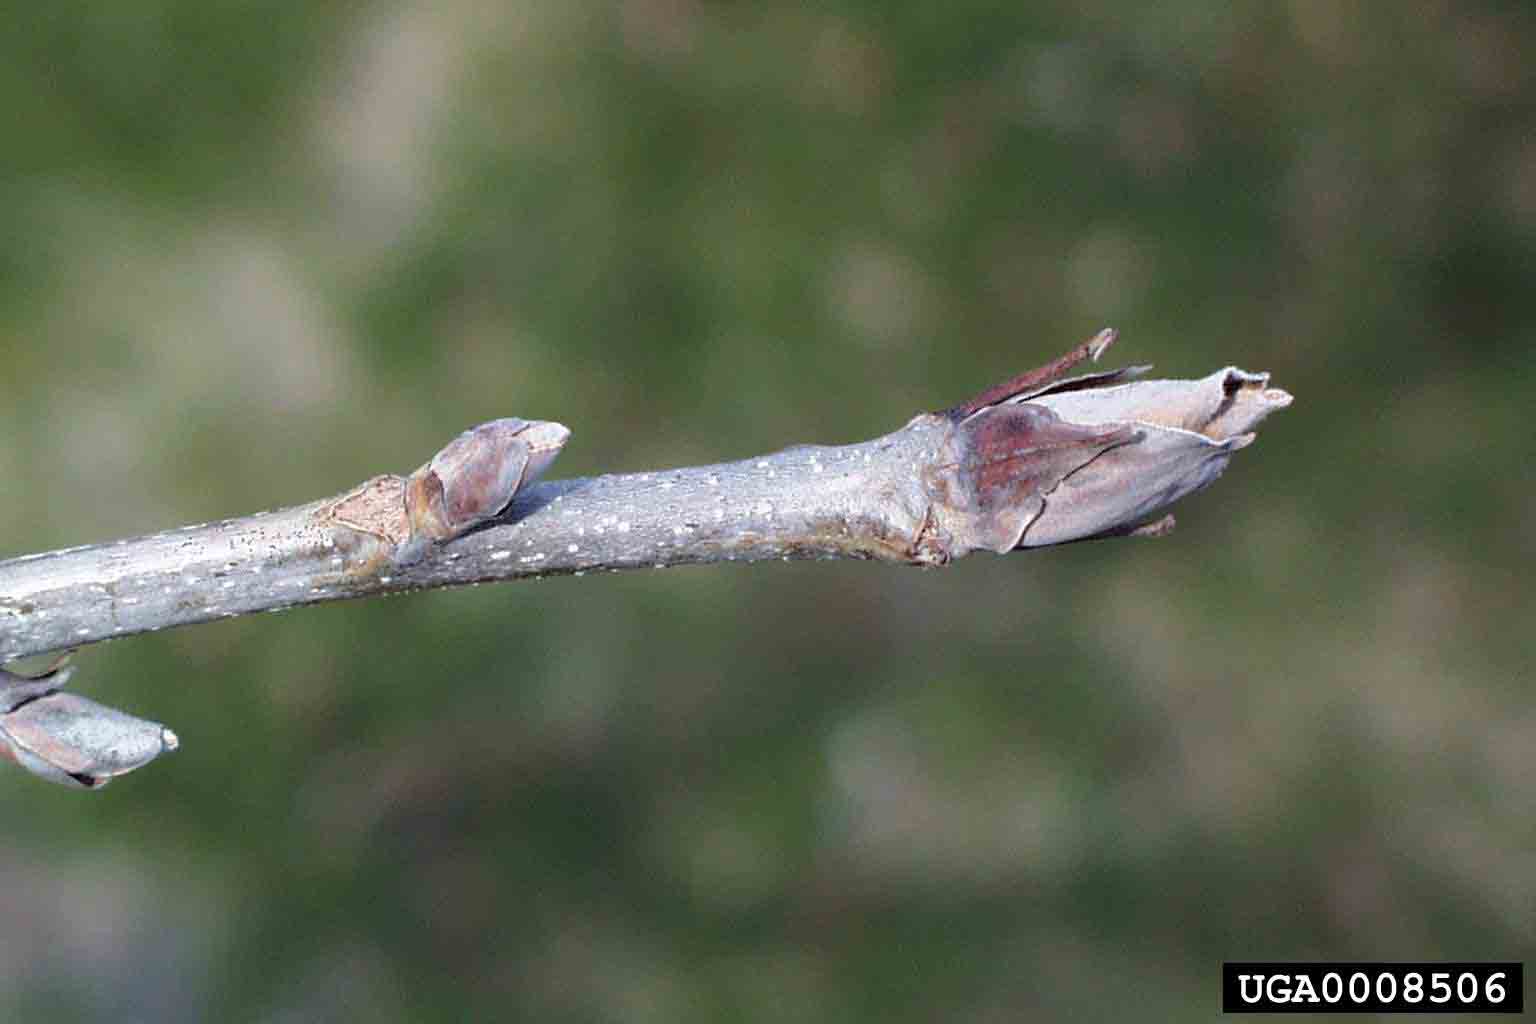 Shellbark hickory twig with bud